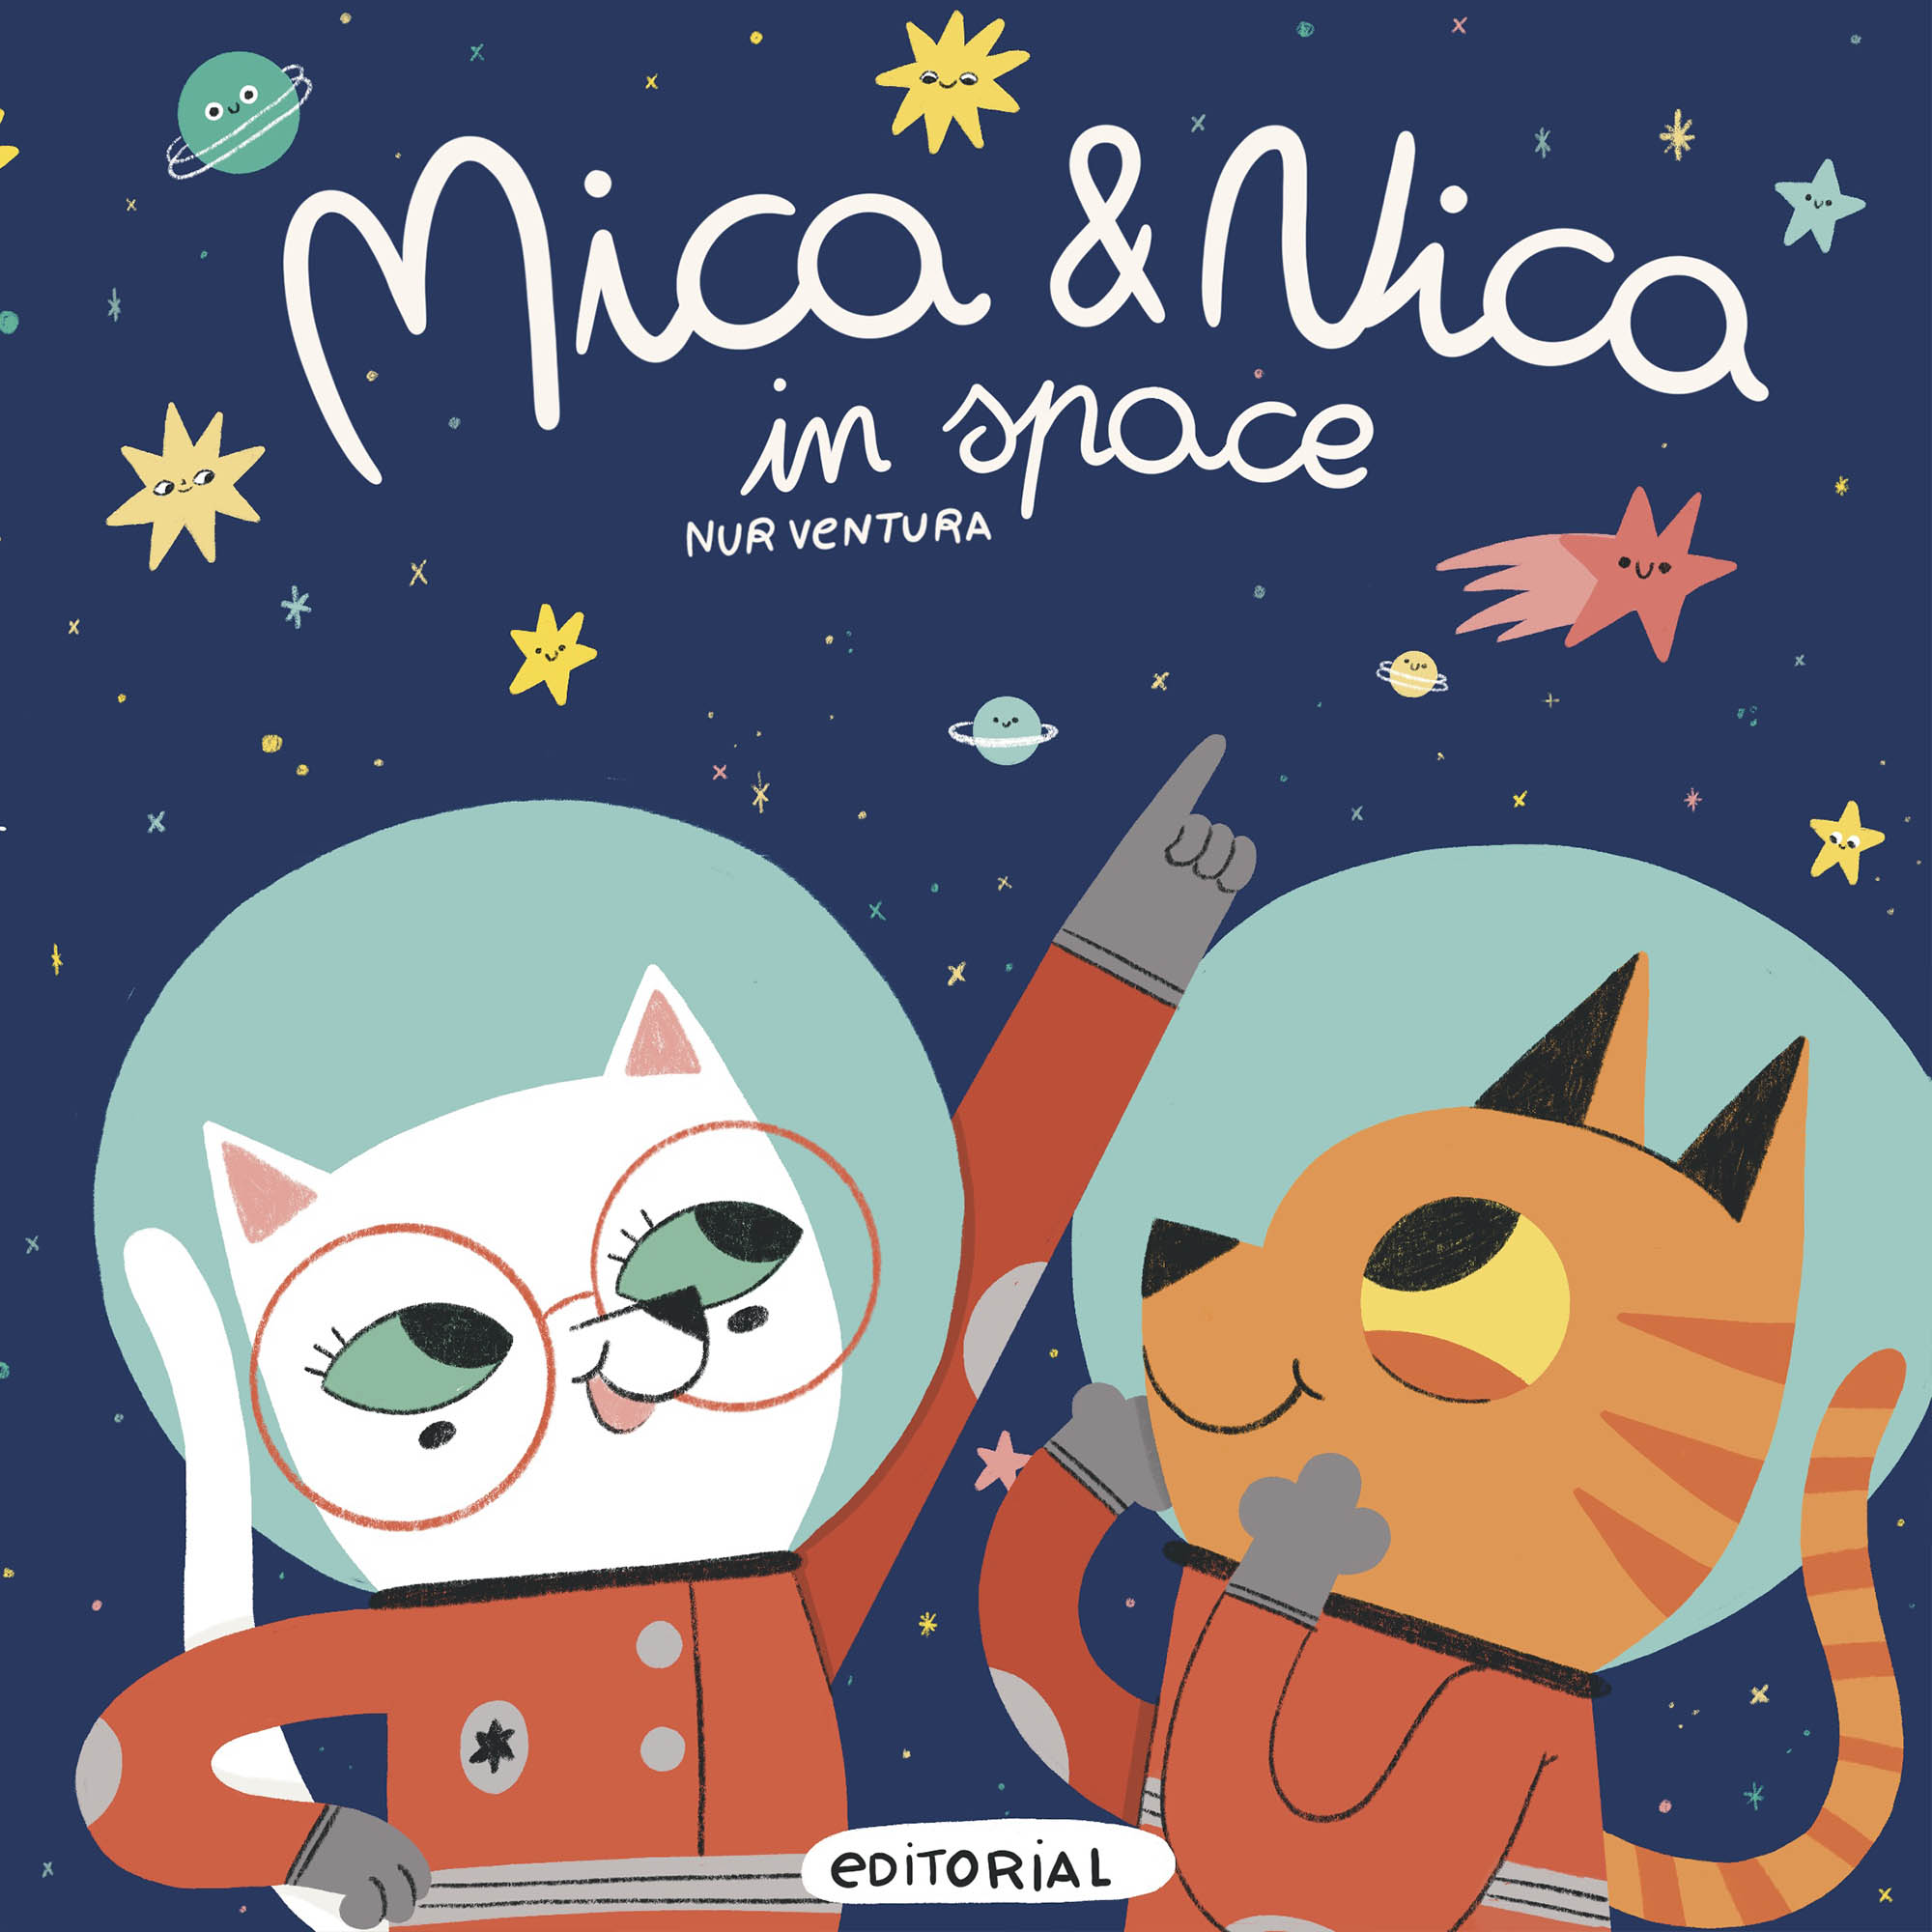 Mica & Nica